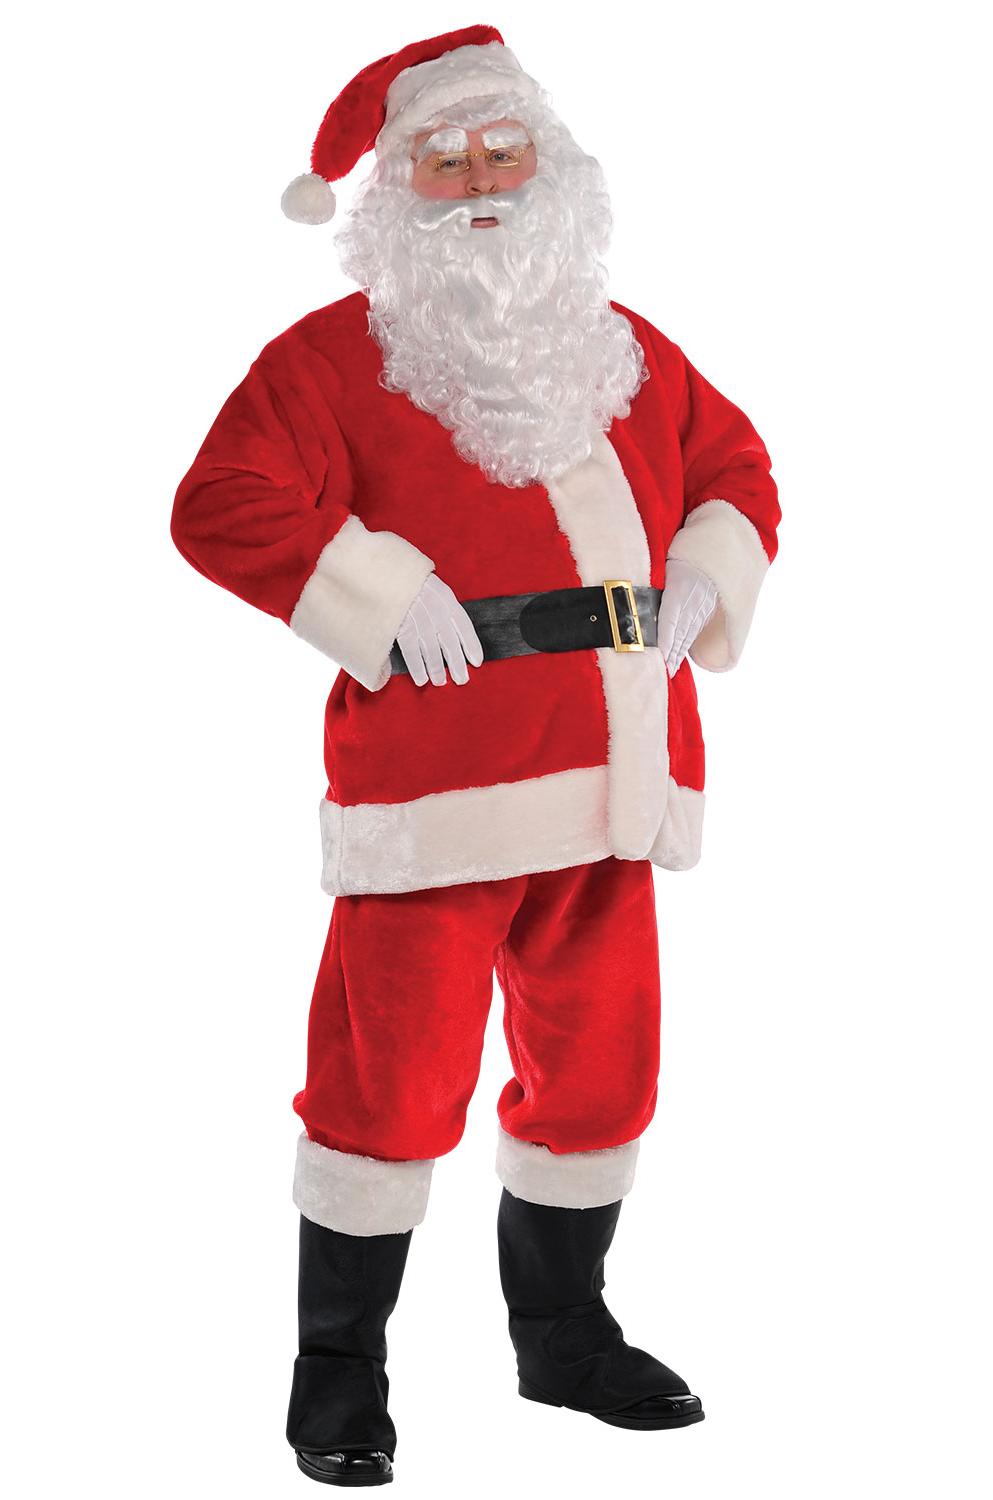 Plush Santa suit